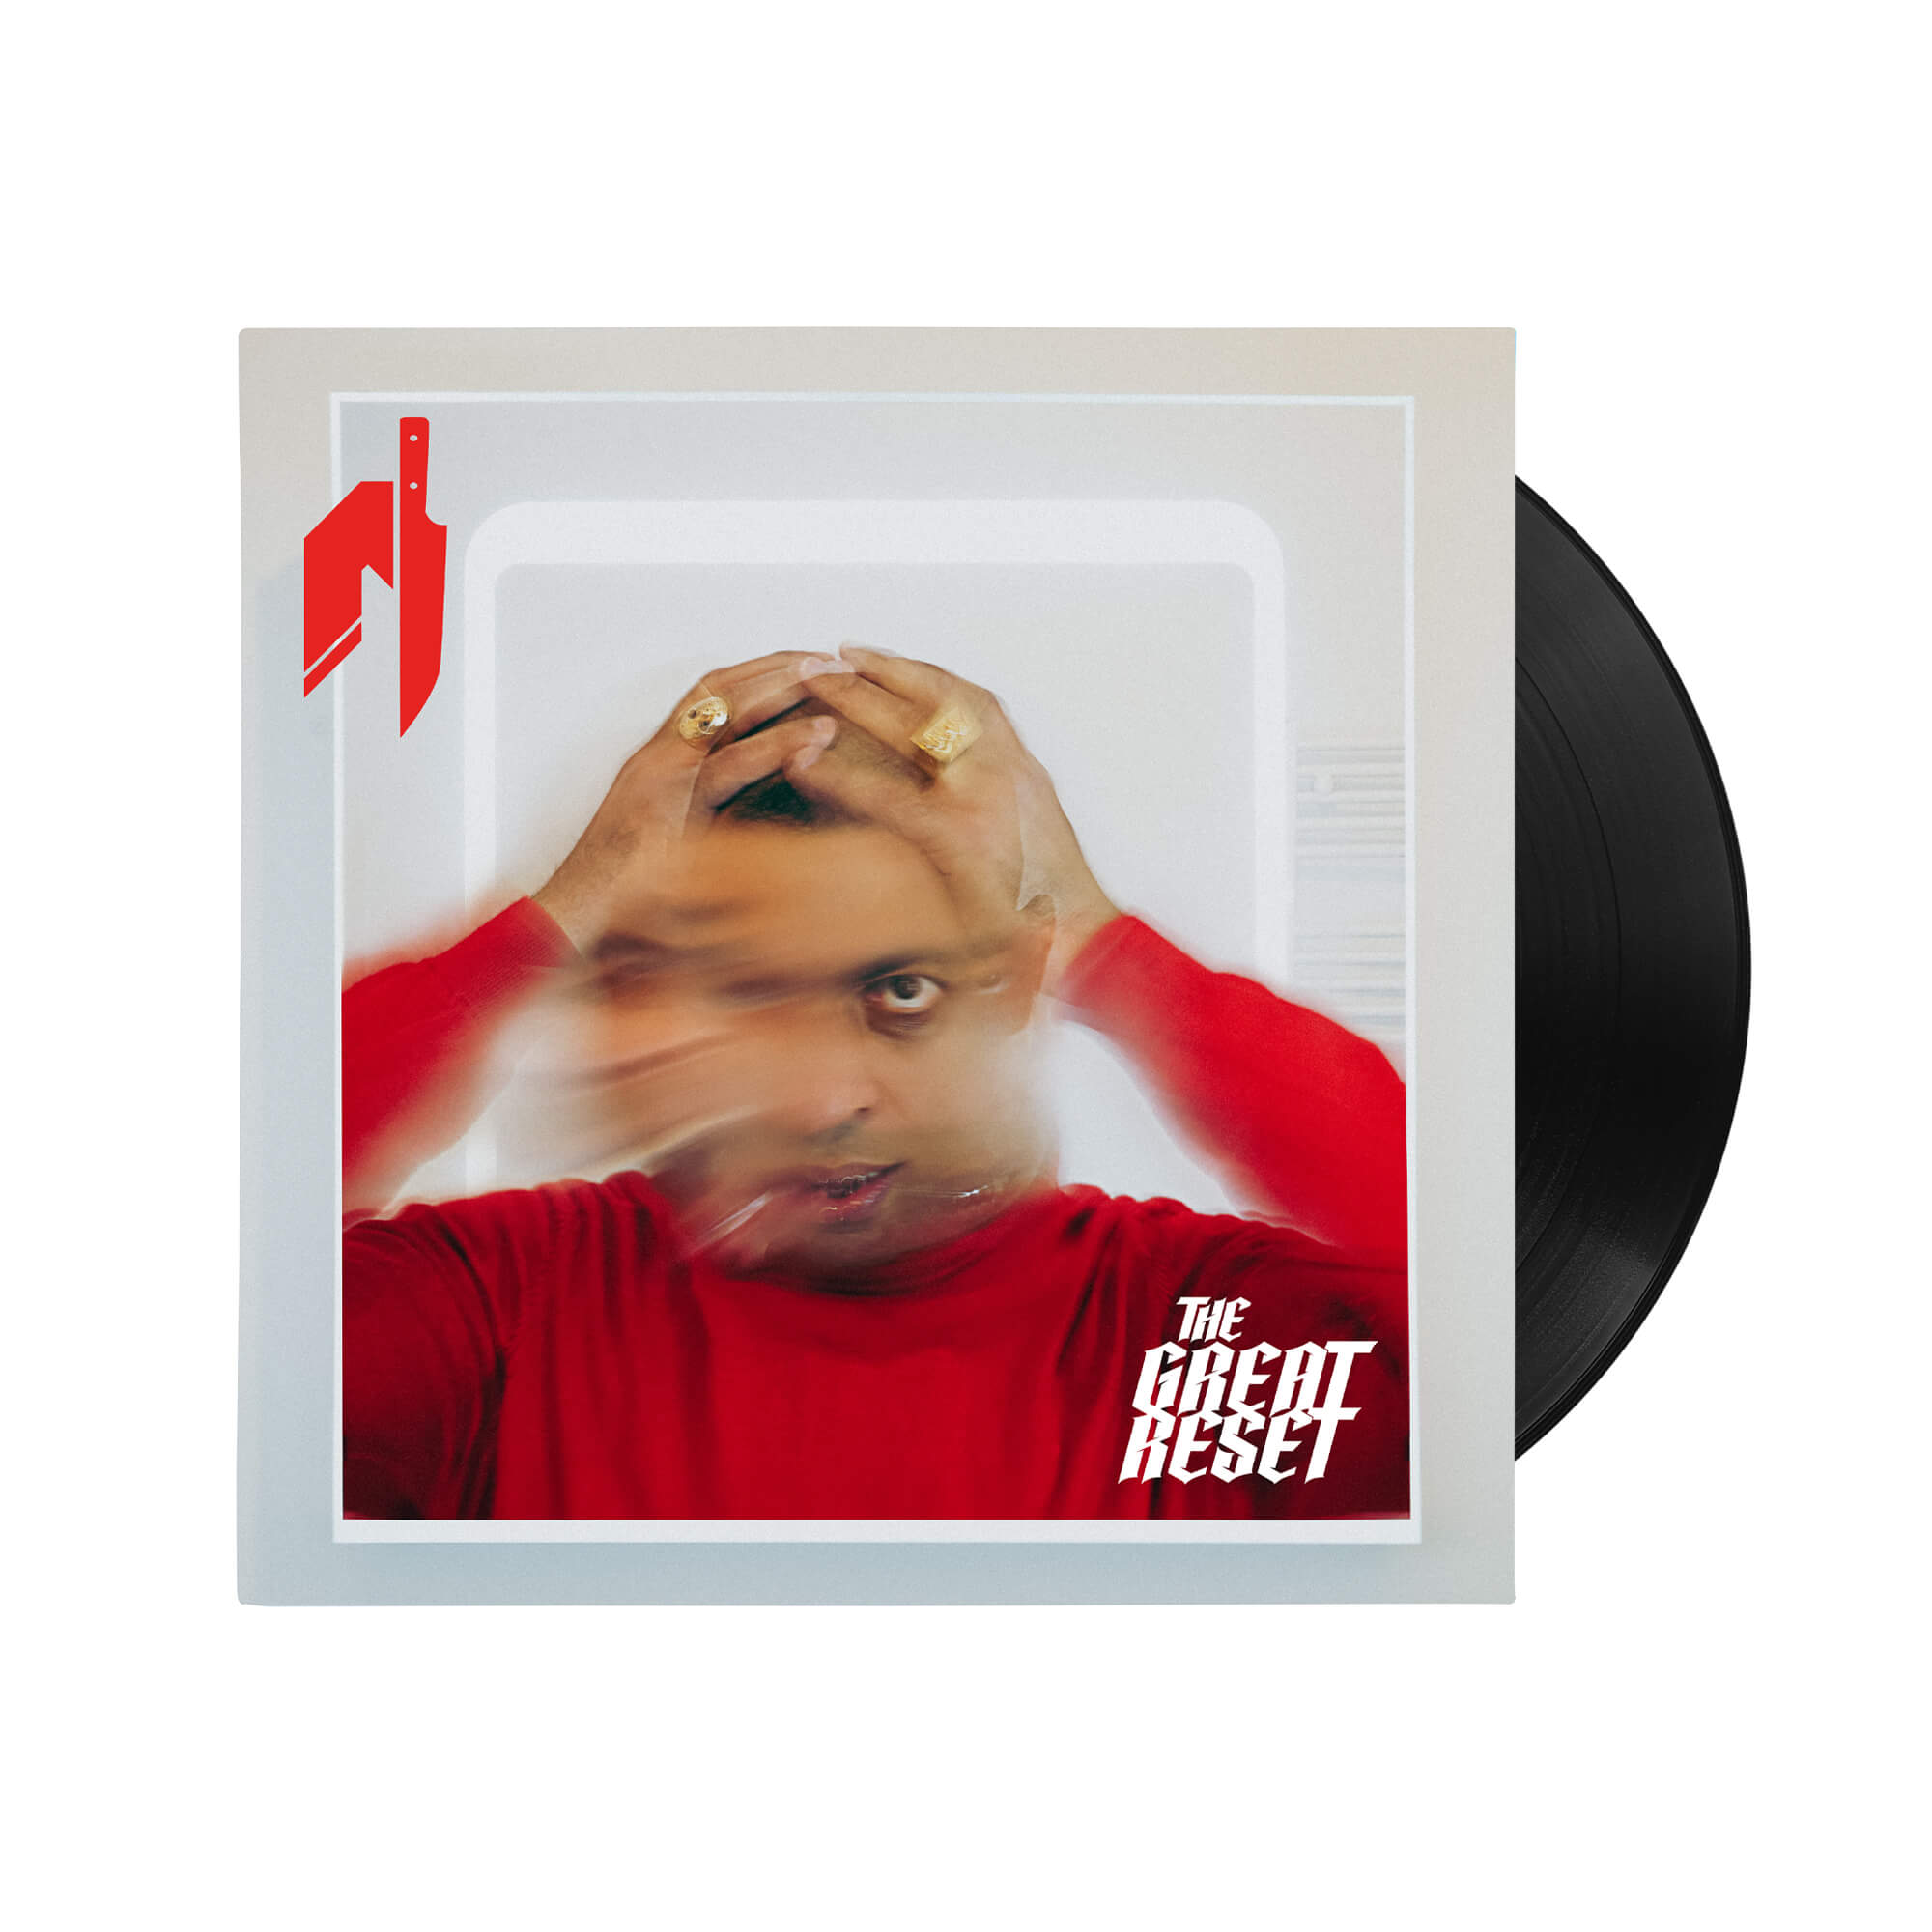 The Great Reset (Ltd. Vinyl)